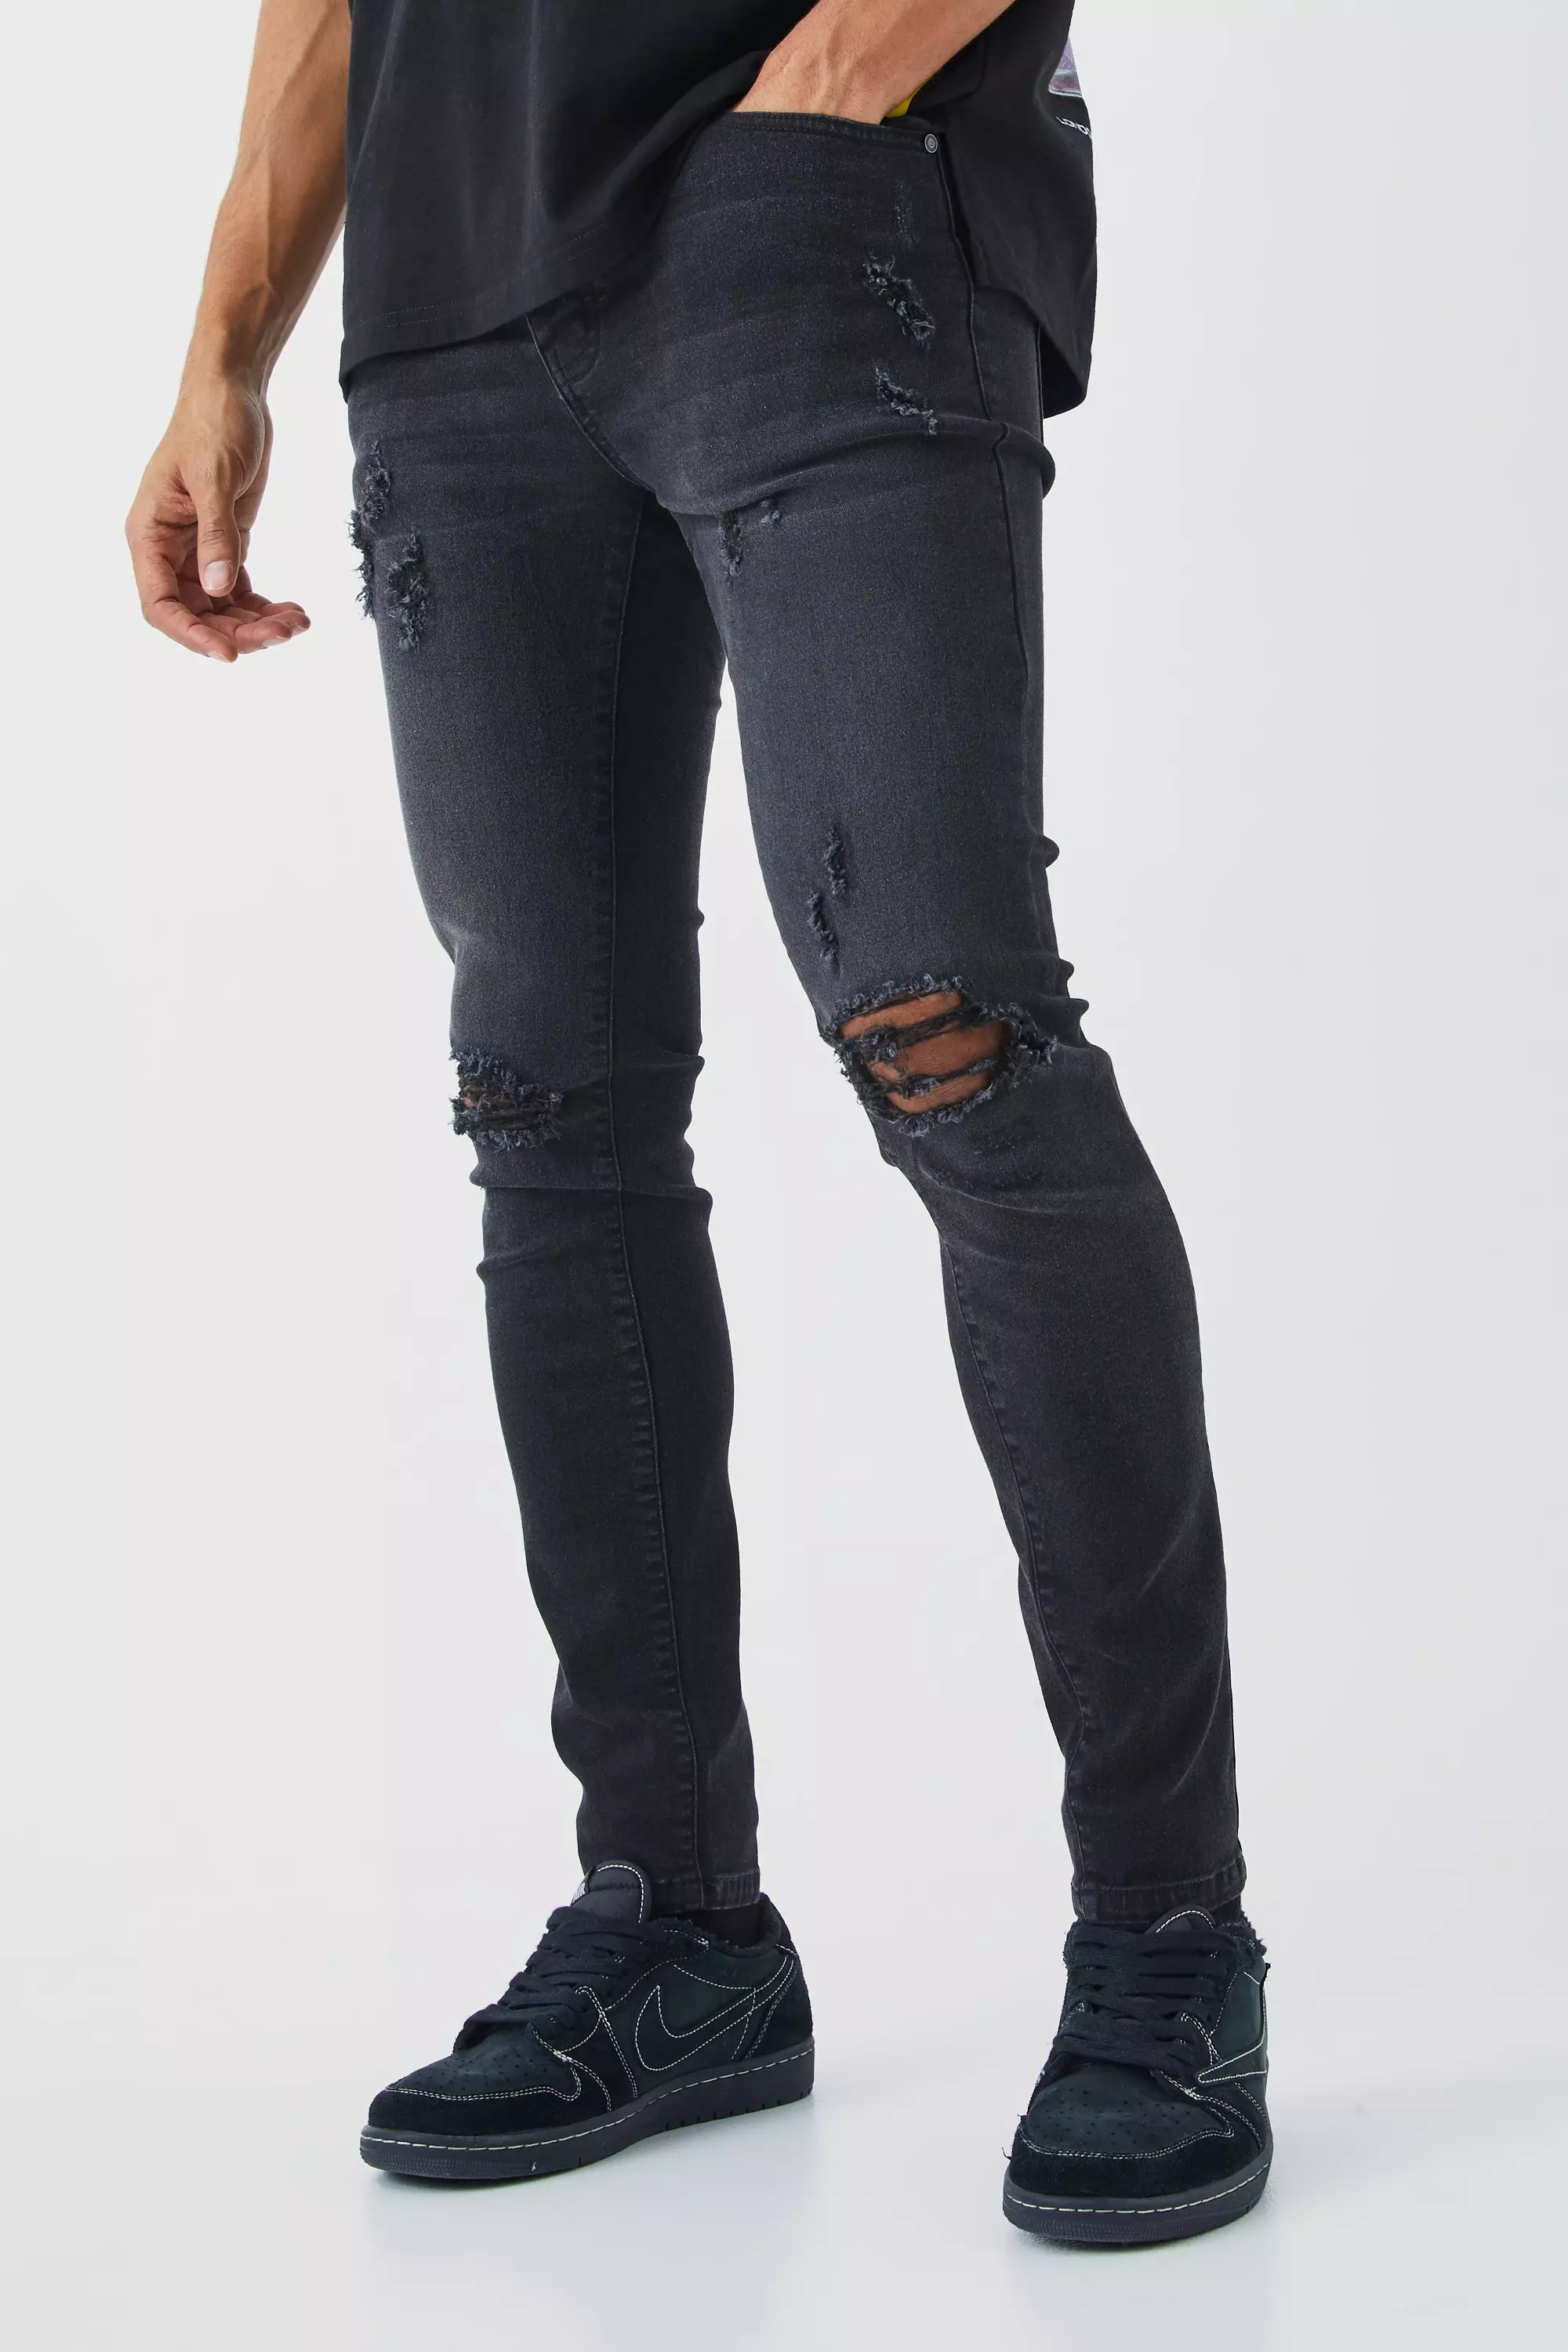 Men's Black Ripped Jeans, Black Distressed Jeans